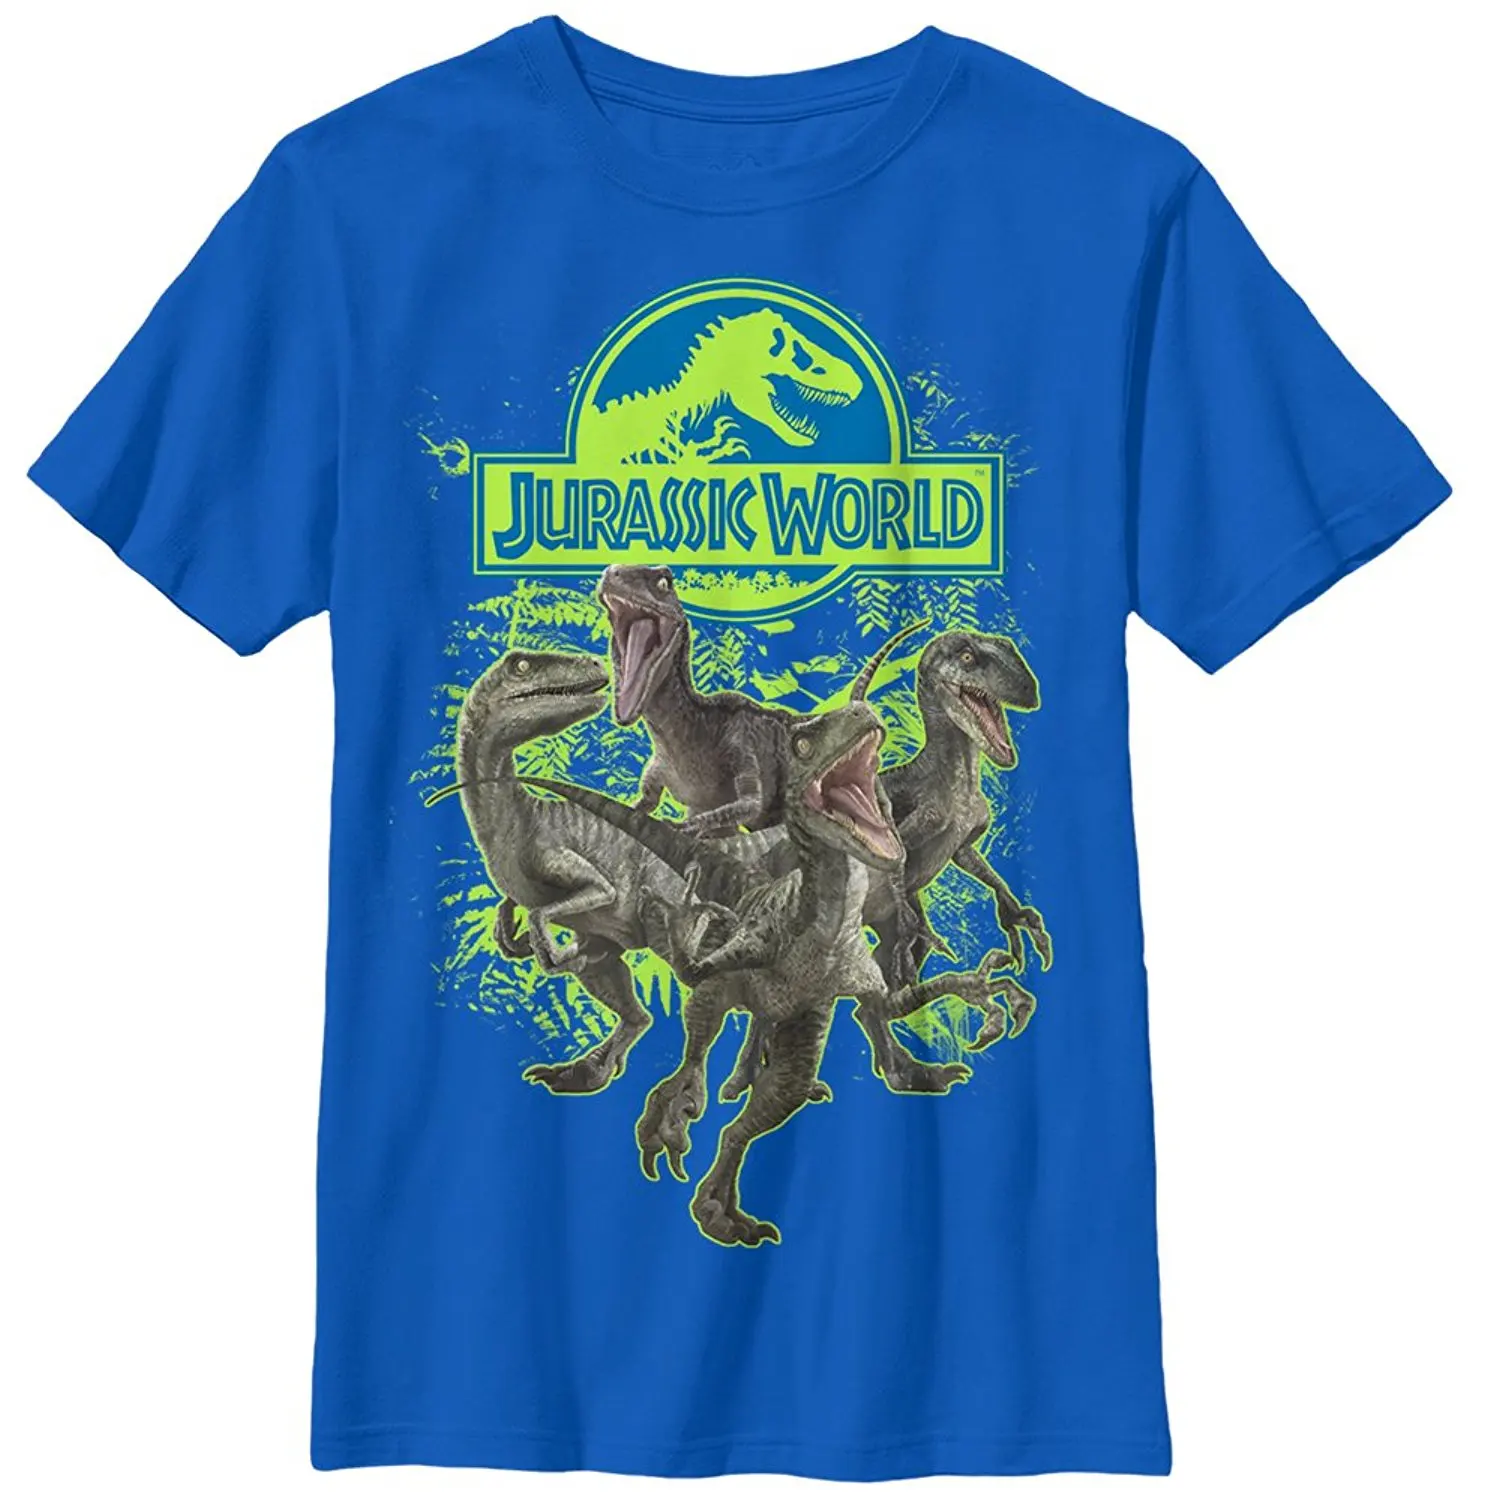 Buy New Jurassic World Boys 3d T Shirt Kid Short Sleeve Jurassic Park T Shirt Children Summer Clothing Dinosaur Tees 4 10 Years In Cheap Price On M Alibaba Com - roblox boys t shirt summer children clothing jurassic world